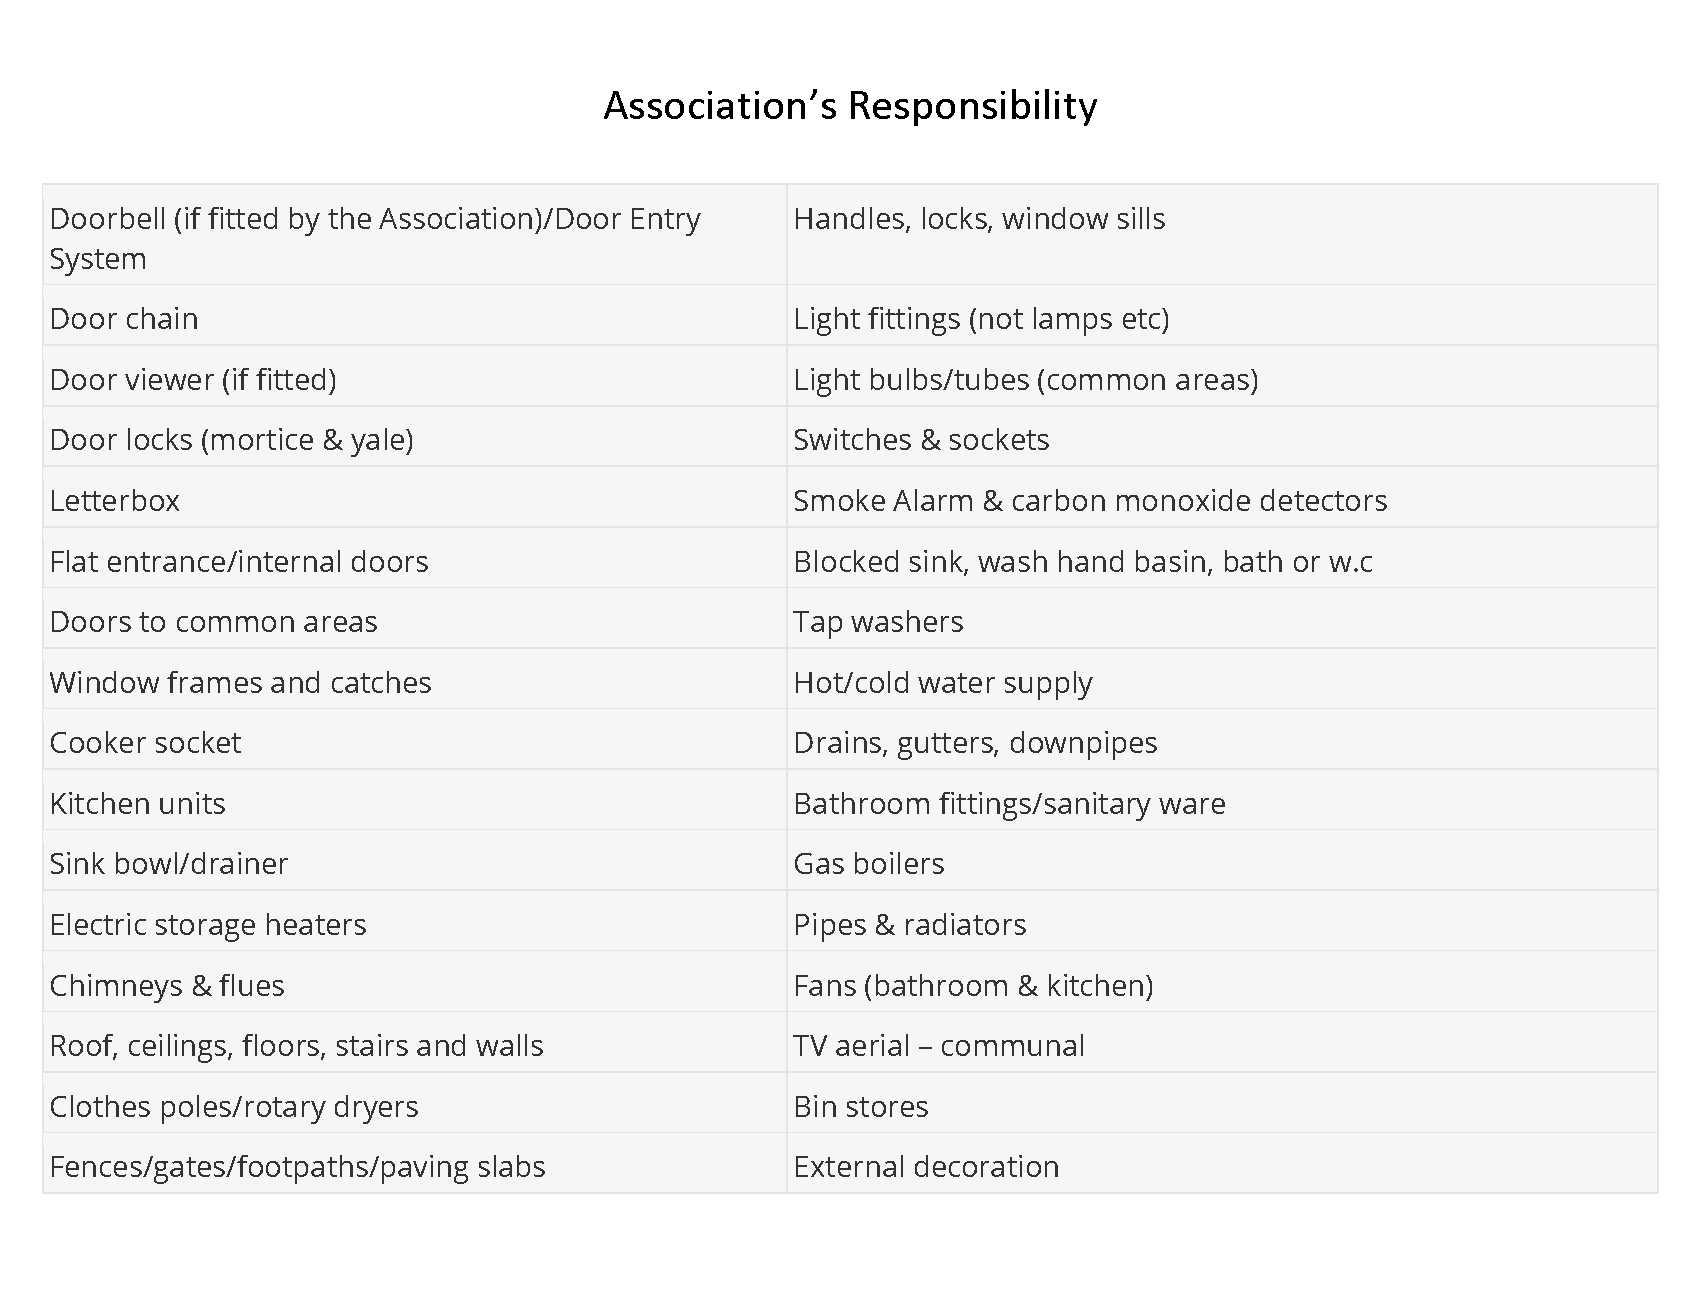 Association Responsibility Table